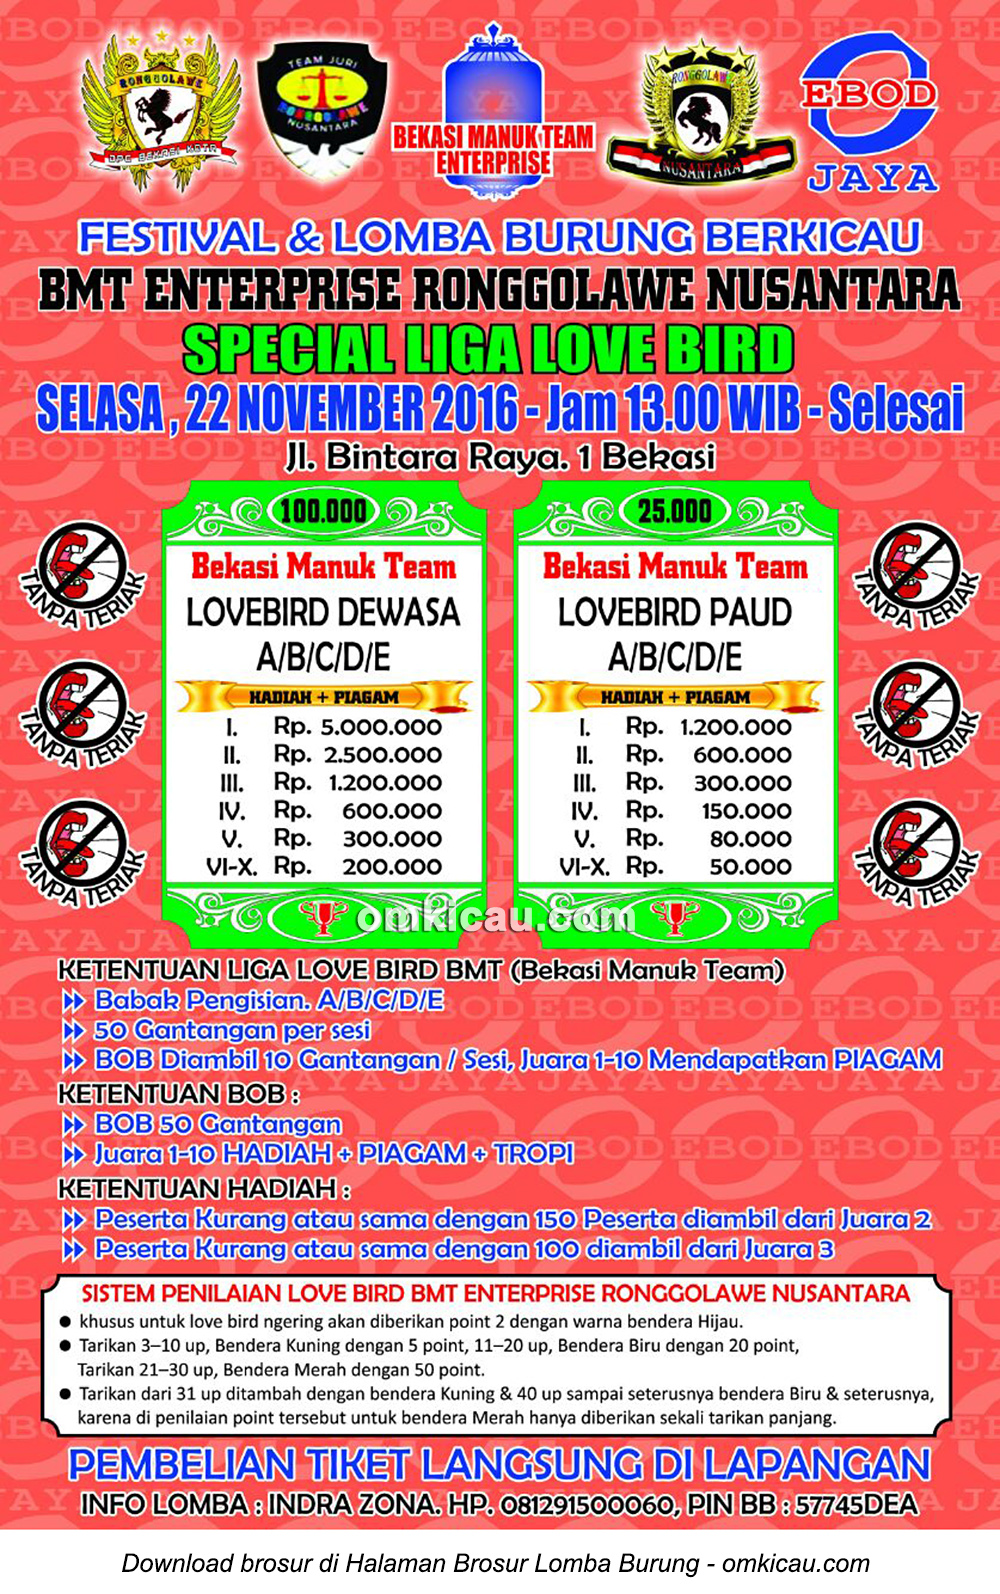 Brosur Lomba Burung Berkicau Special Liga Lovebird BMT Enterprise, Bekasi, 22 November 2016